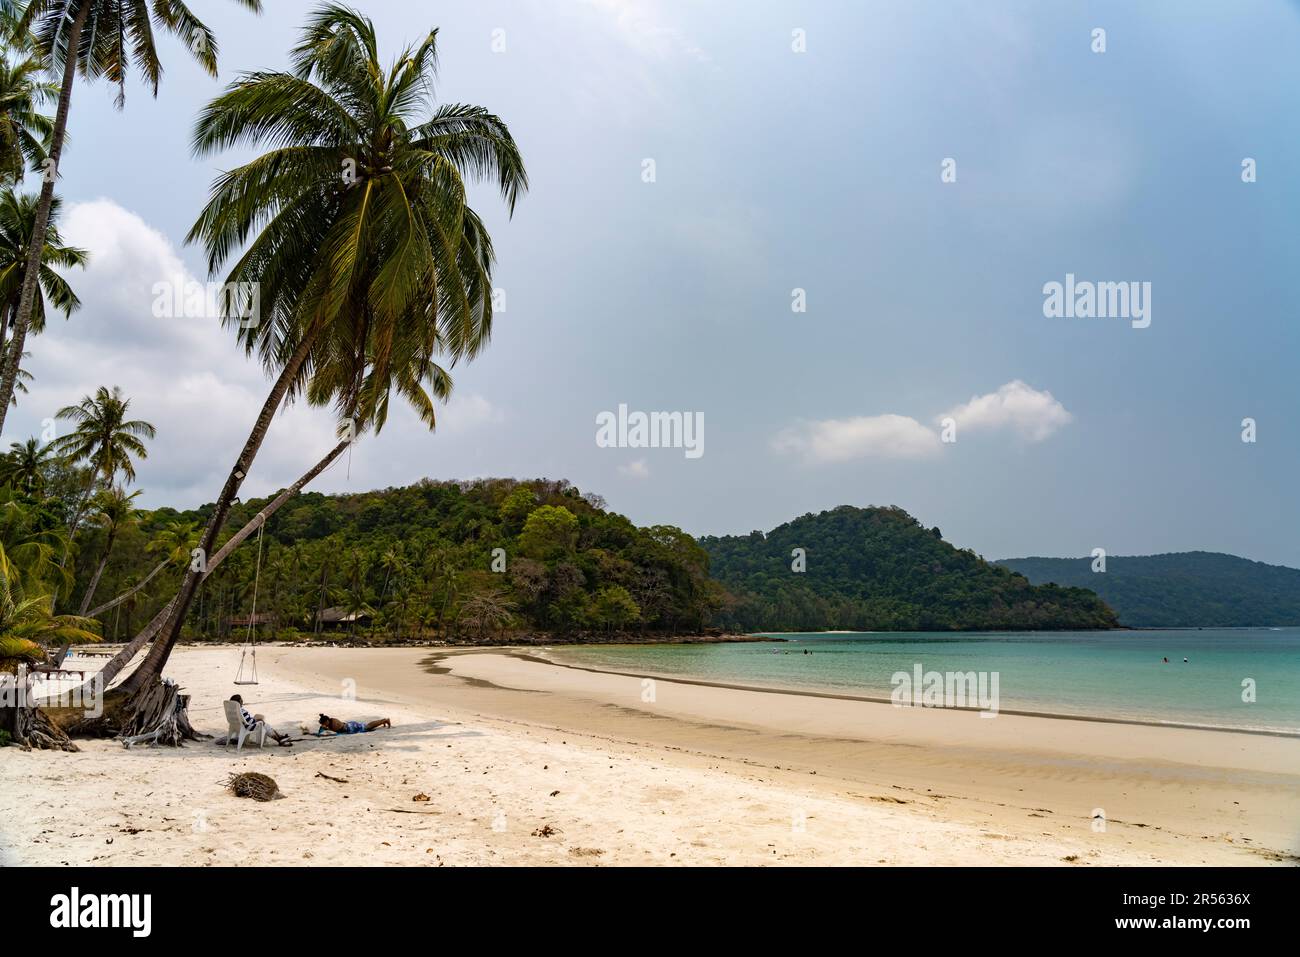 Am Strand Klong hin Beach, Insel Ko Kut oder Koh Kood im Golf von Thailand, Asien | Klong hin Beach, Ko Kut oder Koh Kood, Insel im Golf von Tha Stockfoto